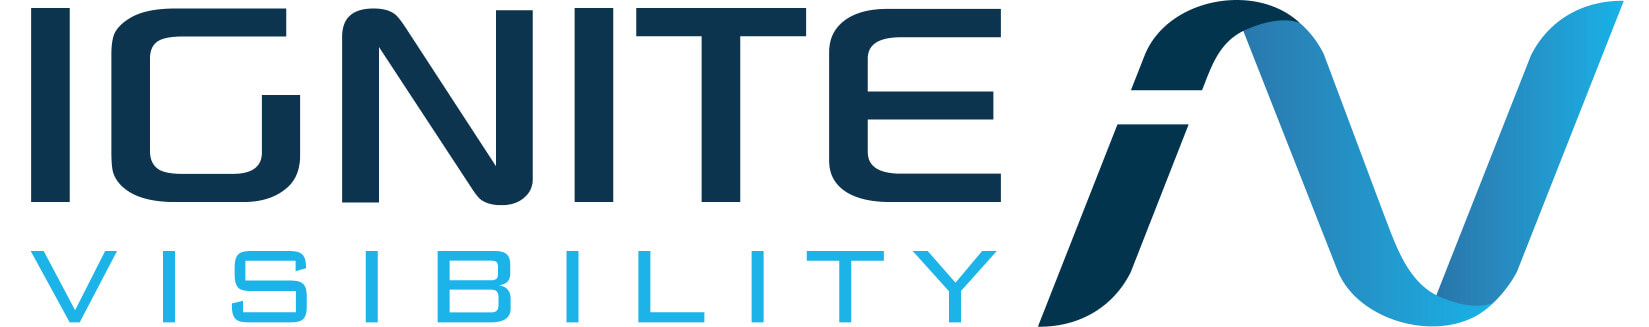 Best San Diego SEO Business Logo: Ignite Visibility